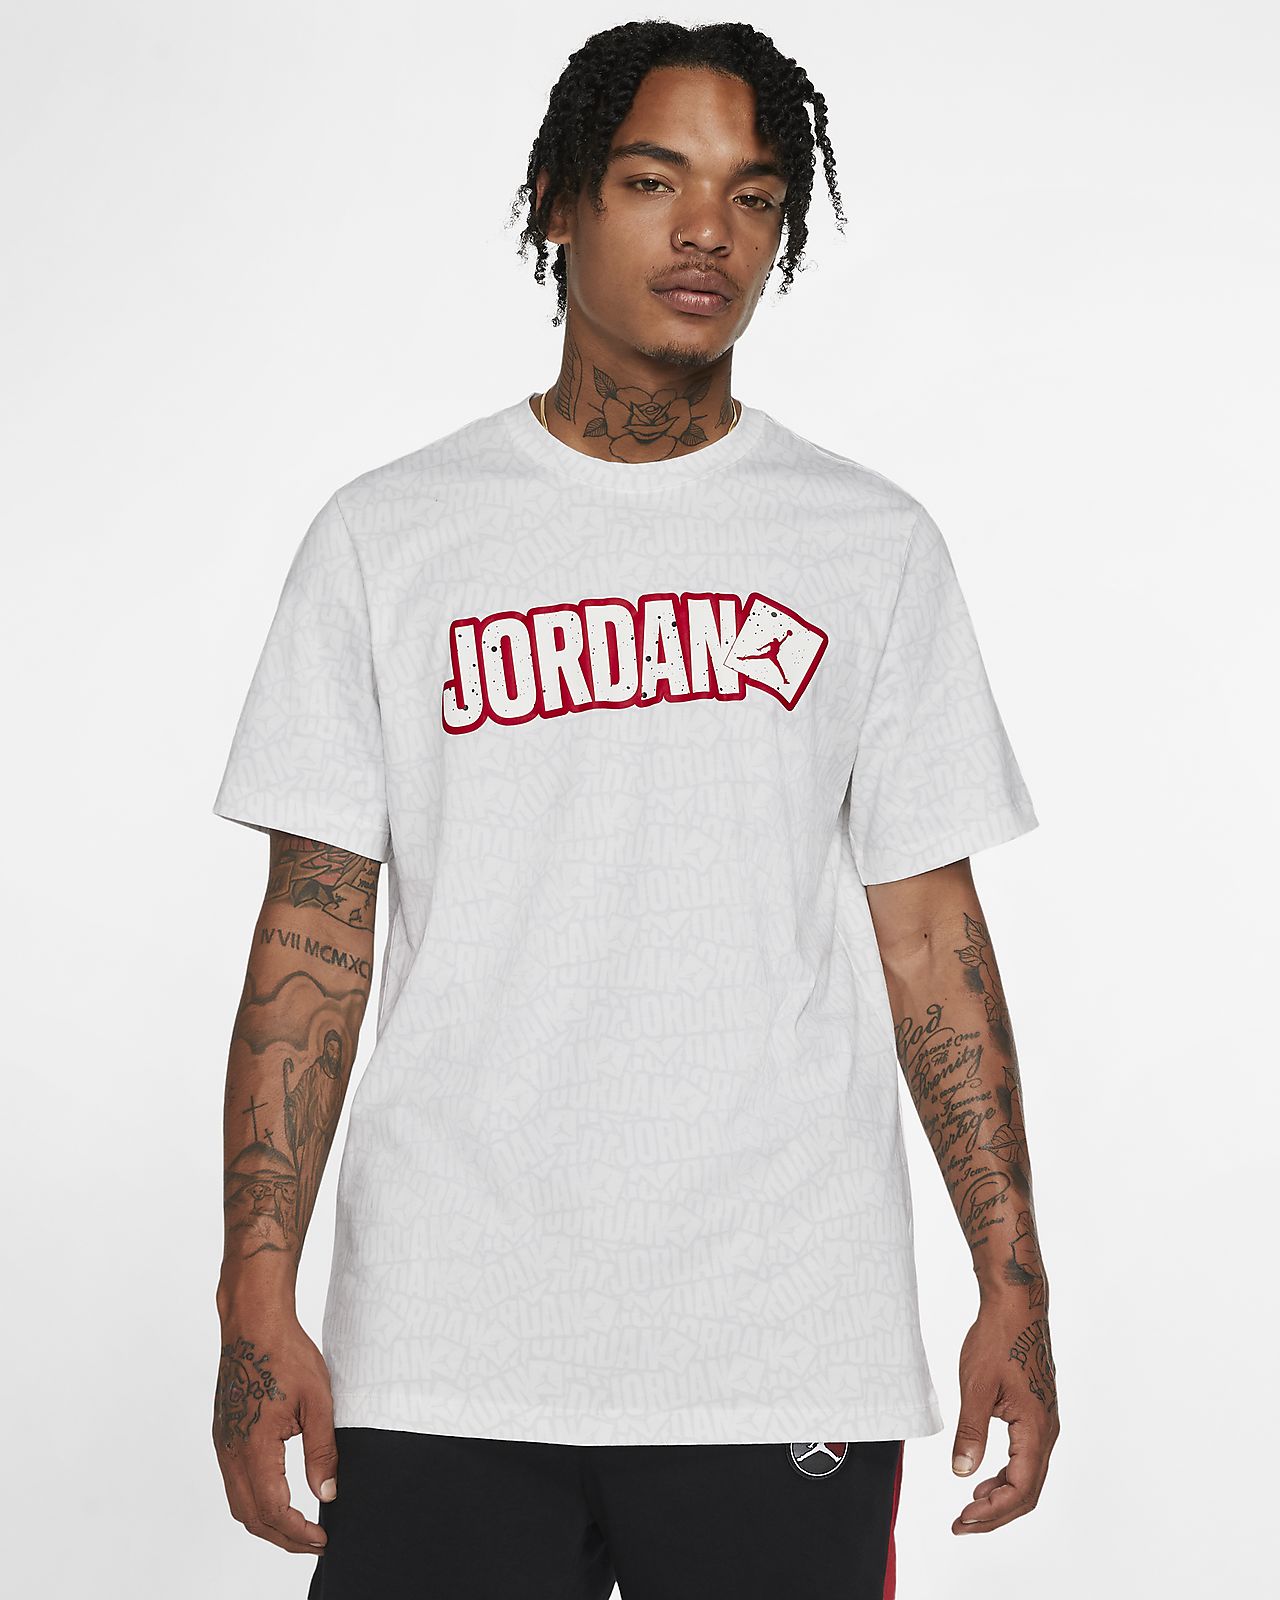 jordan clothing brand